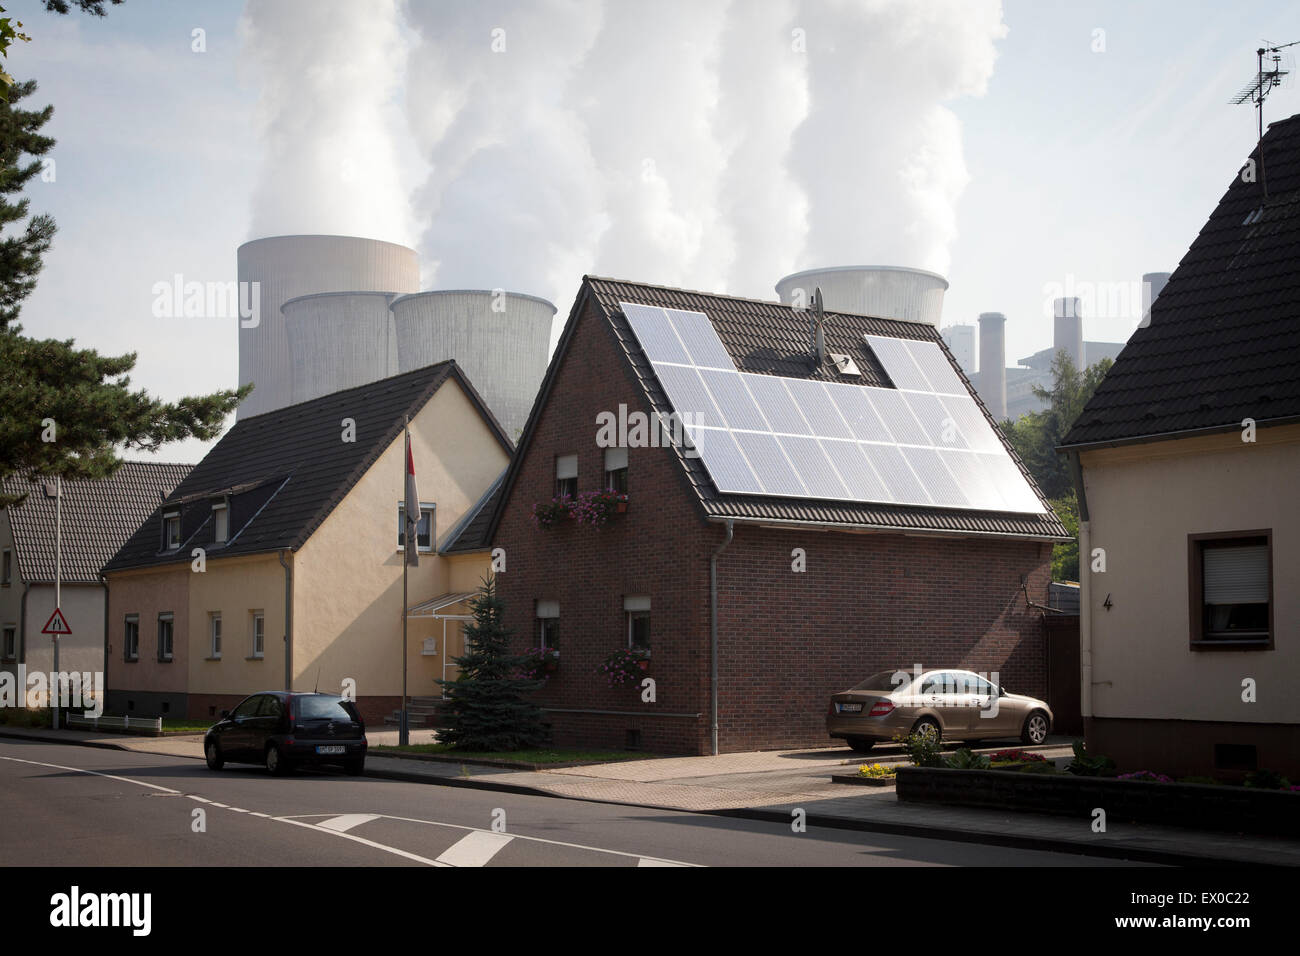 Europe, Germany, North Rhine-Westphalia, Bergheim, brown coal power station Niederaussem, solar collectors on roof Stock Photo